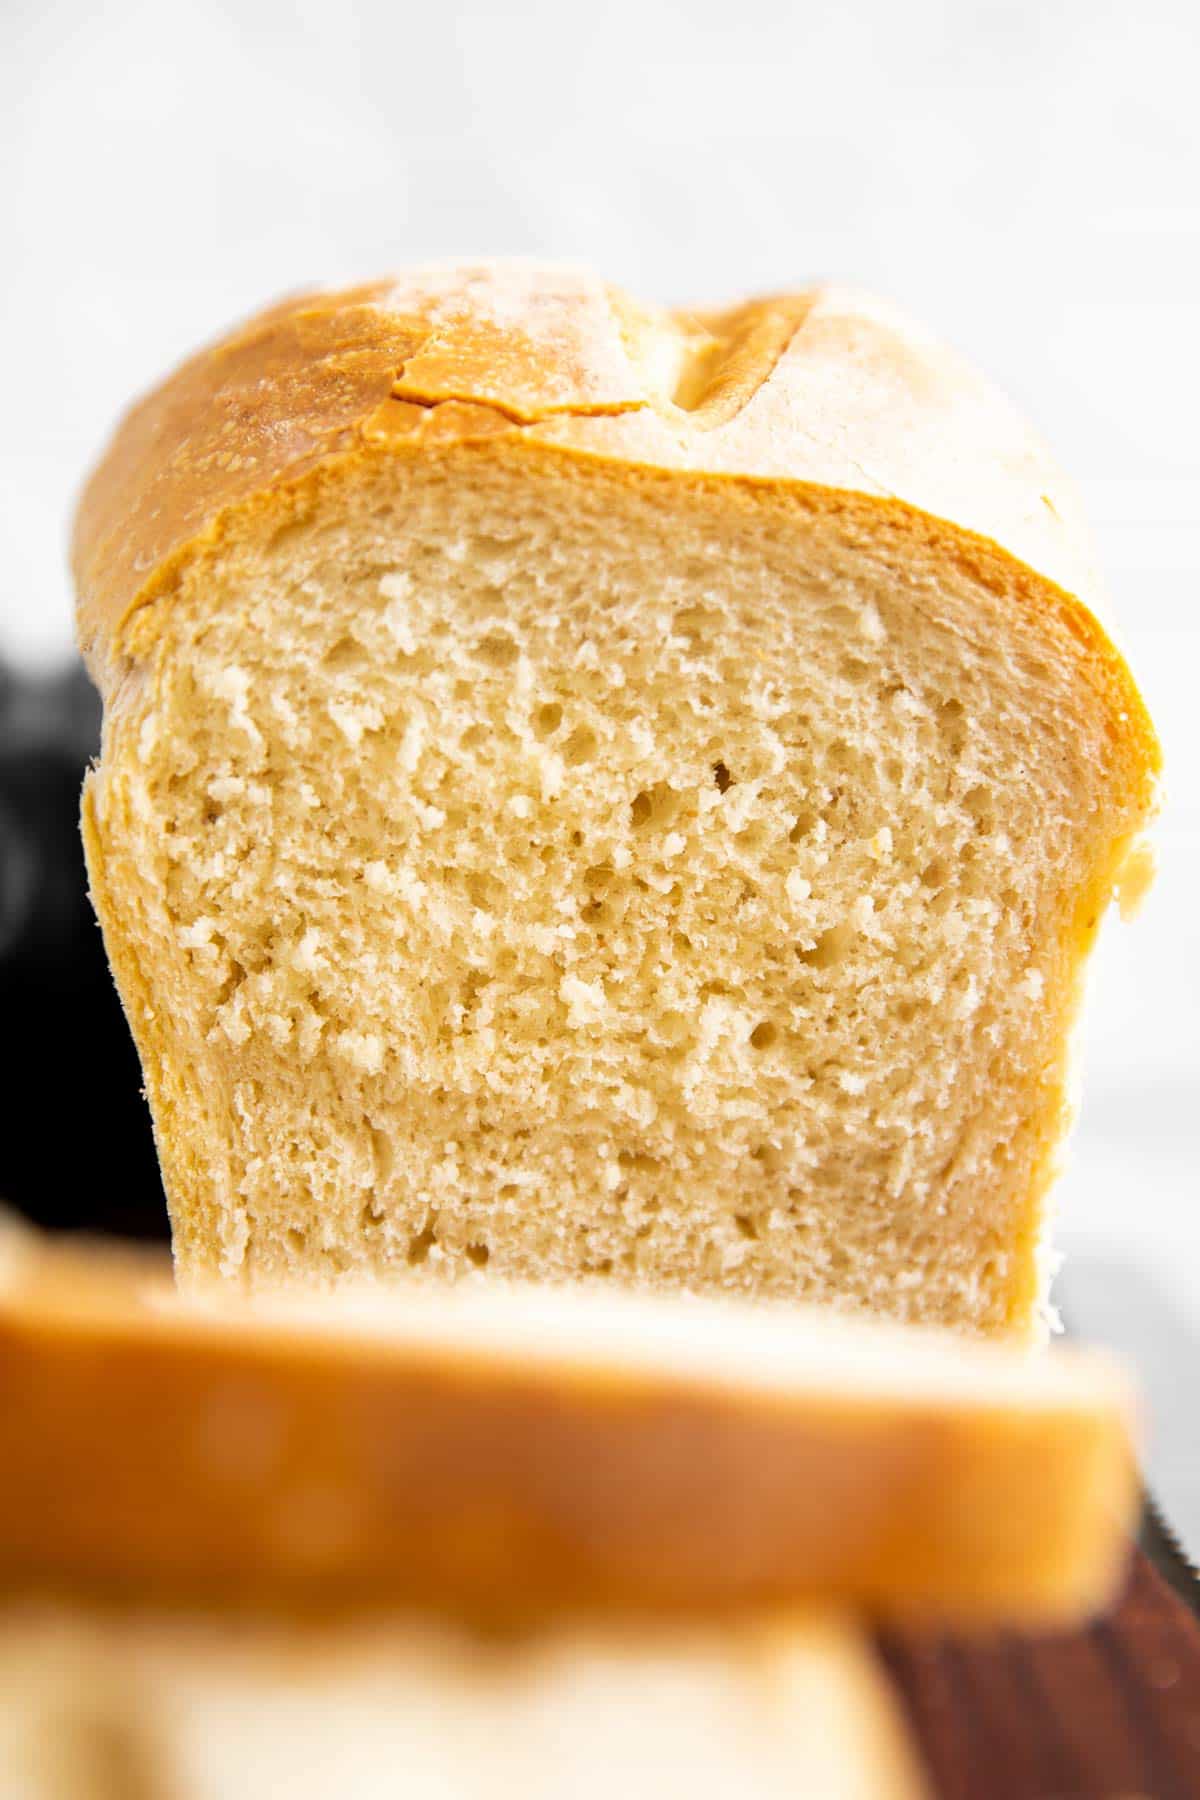 https://www.savorynothings.com/wp-content/uploads/2020/05/homemade-bread-image-3.jpg